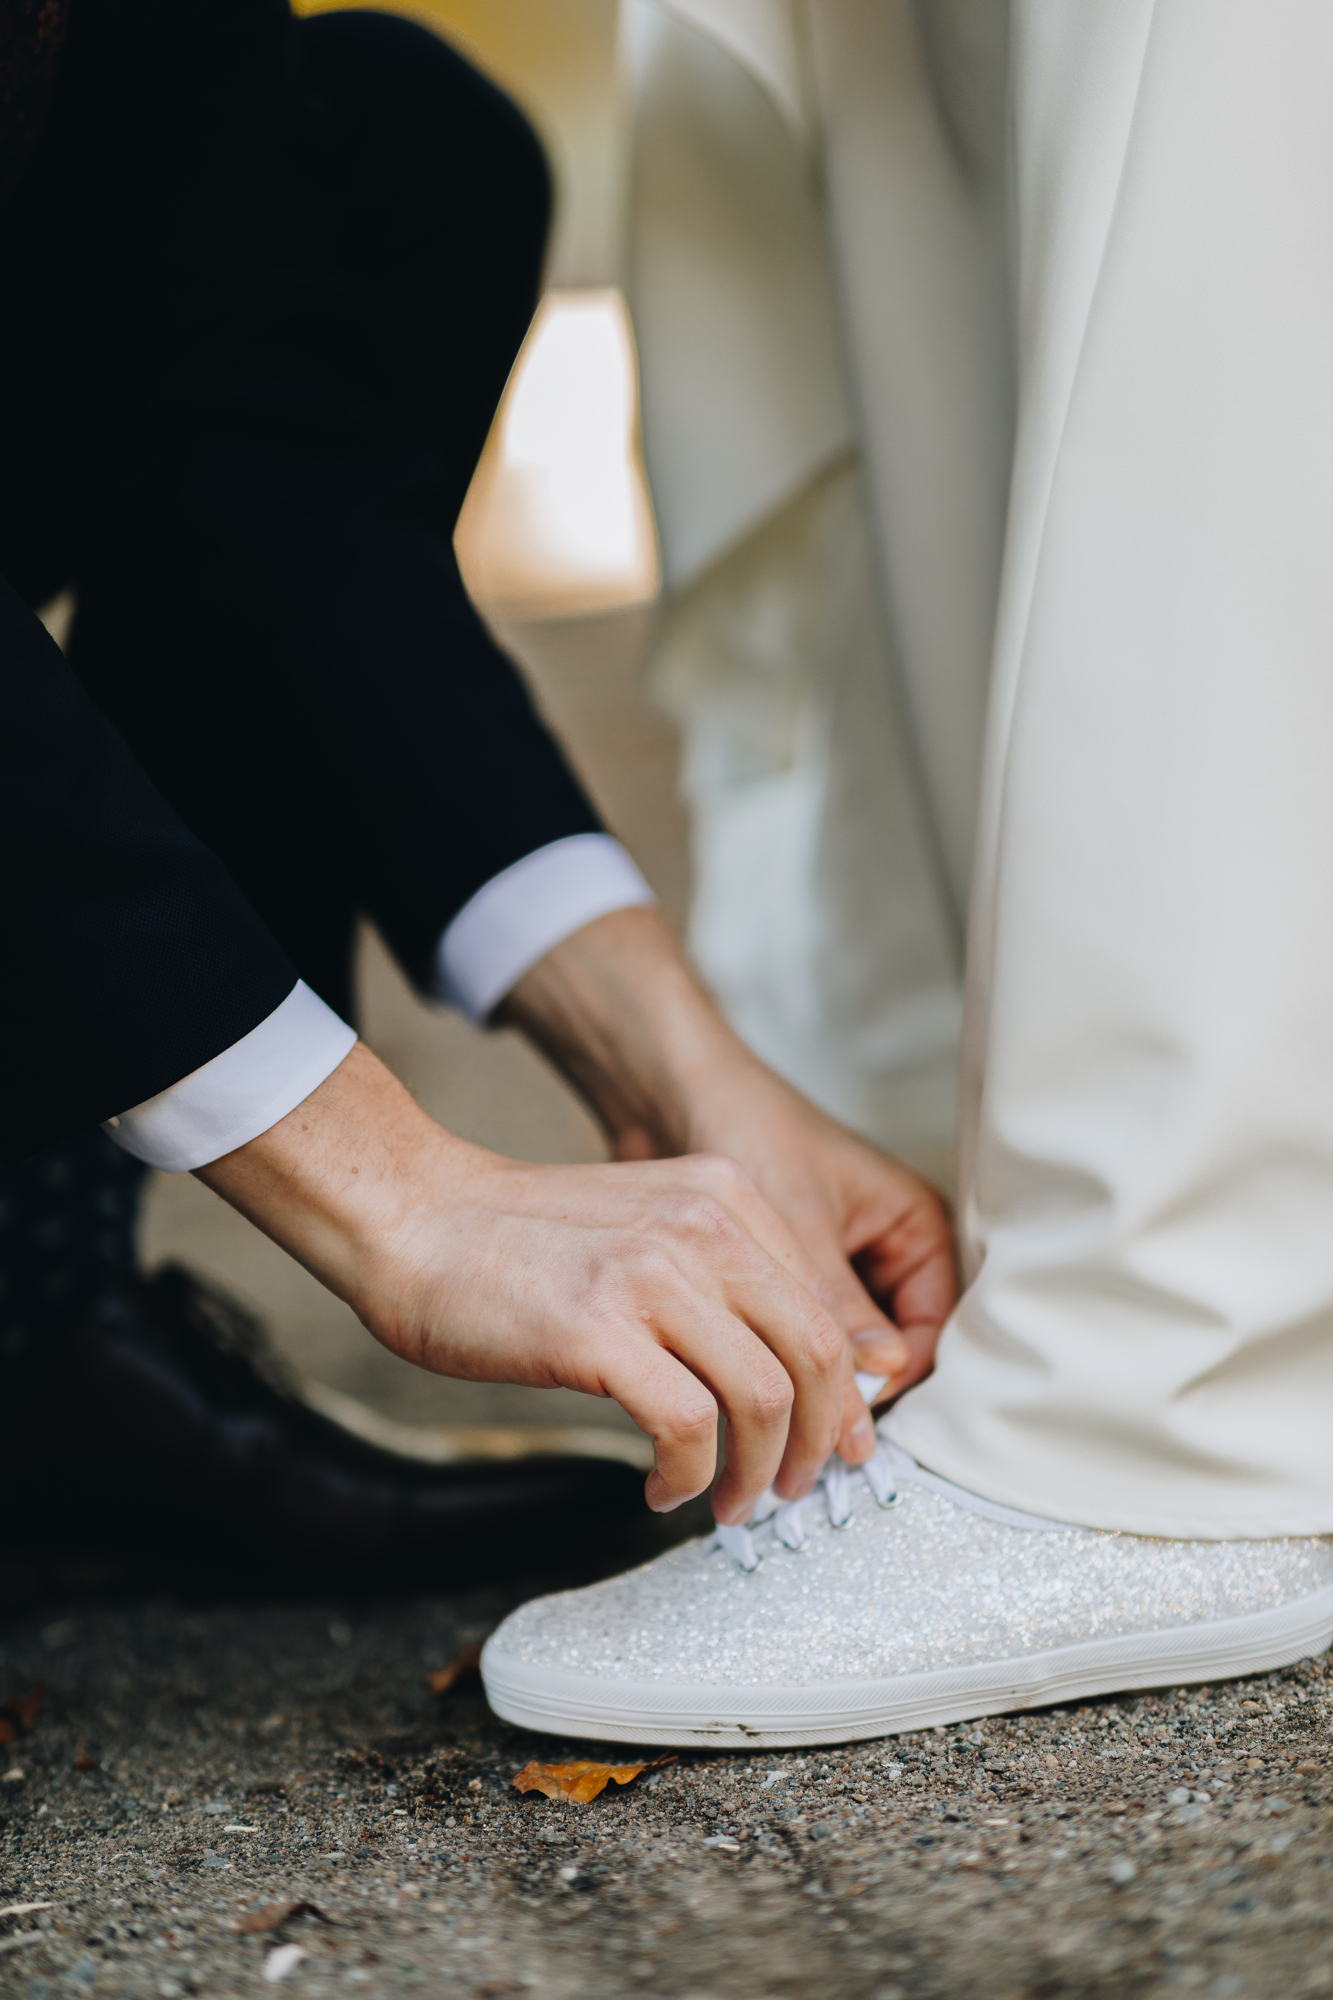 Fun candid Prospect Park wedding photos while groom ties bride's shoe